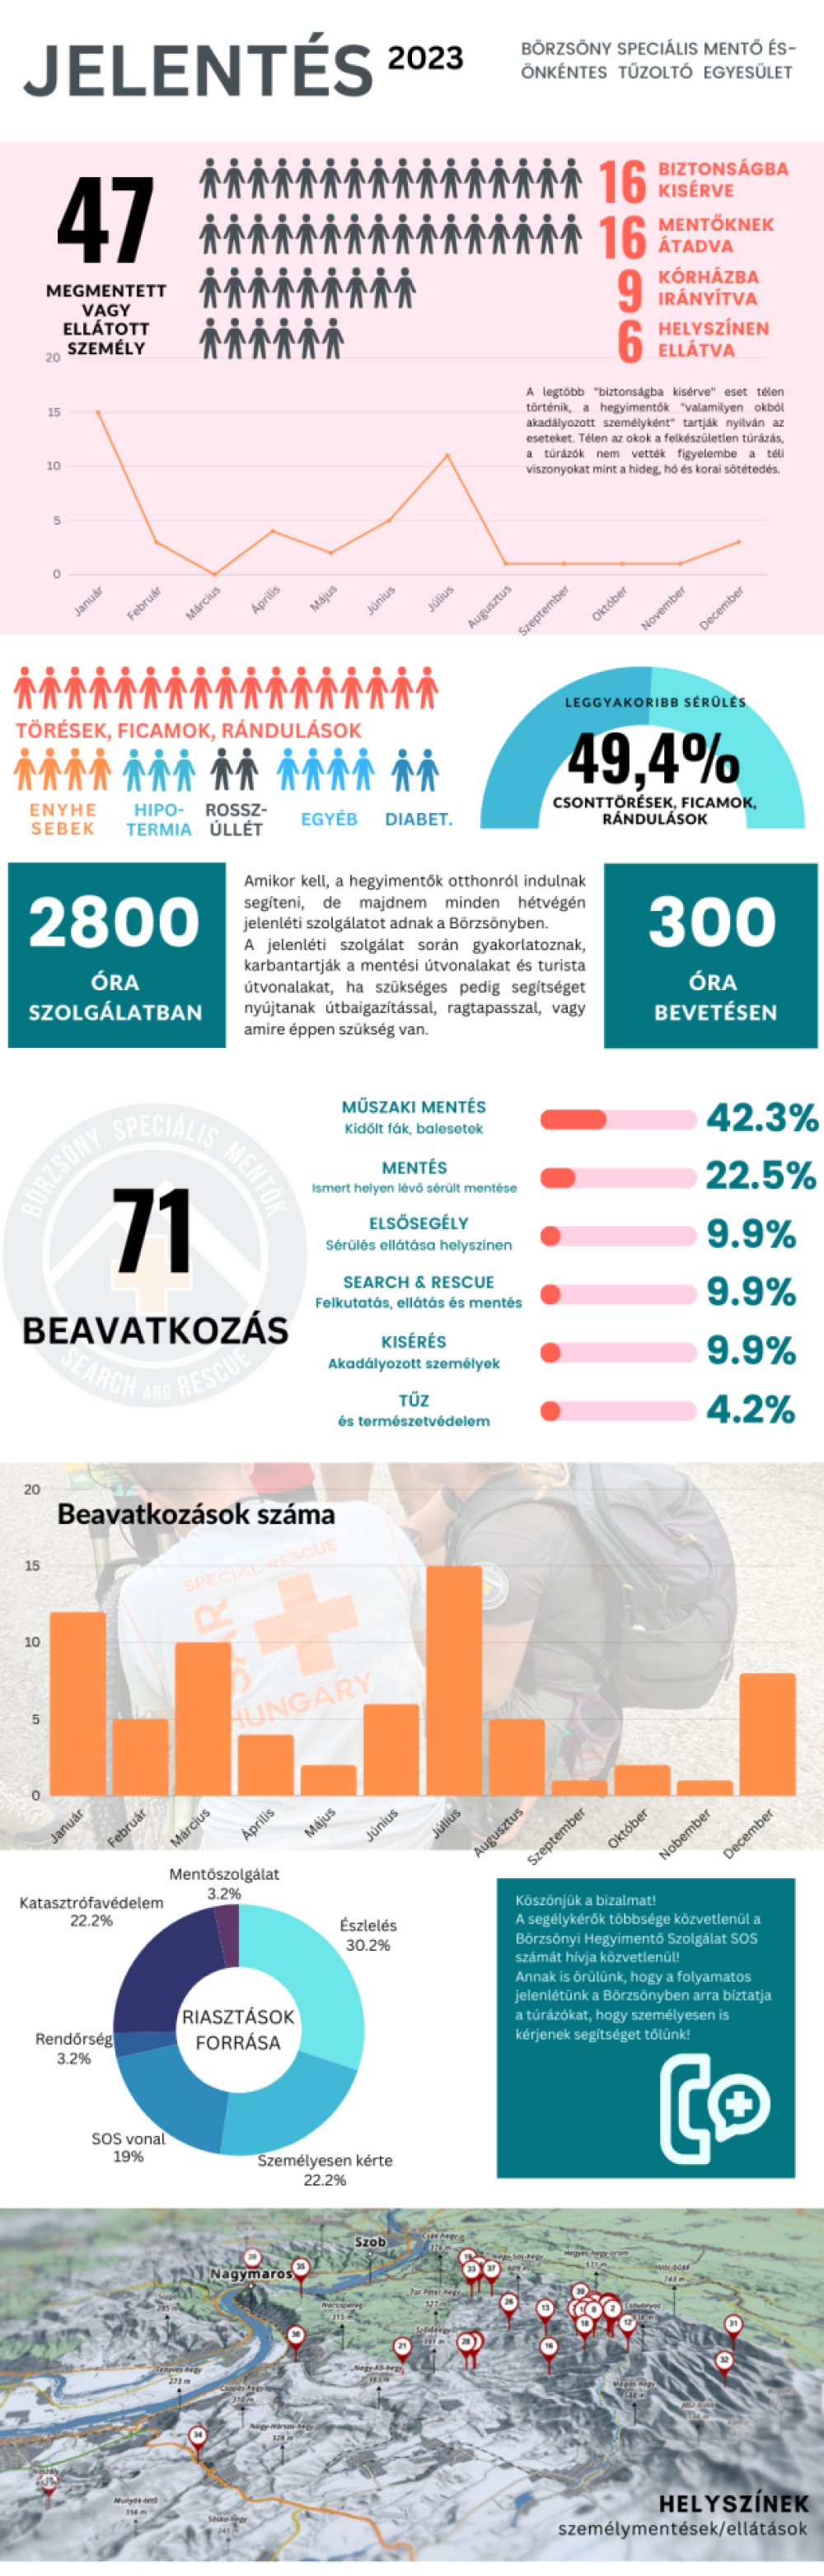 Borzsony-Specialis-Mentok-jelentes-2023-eves-infografika-1